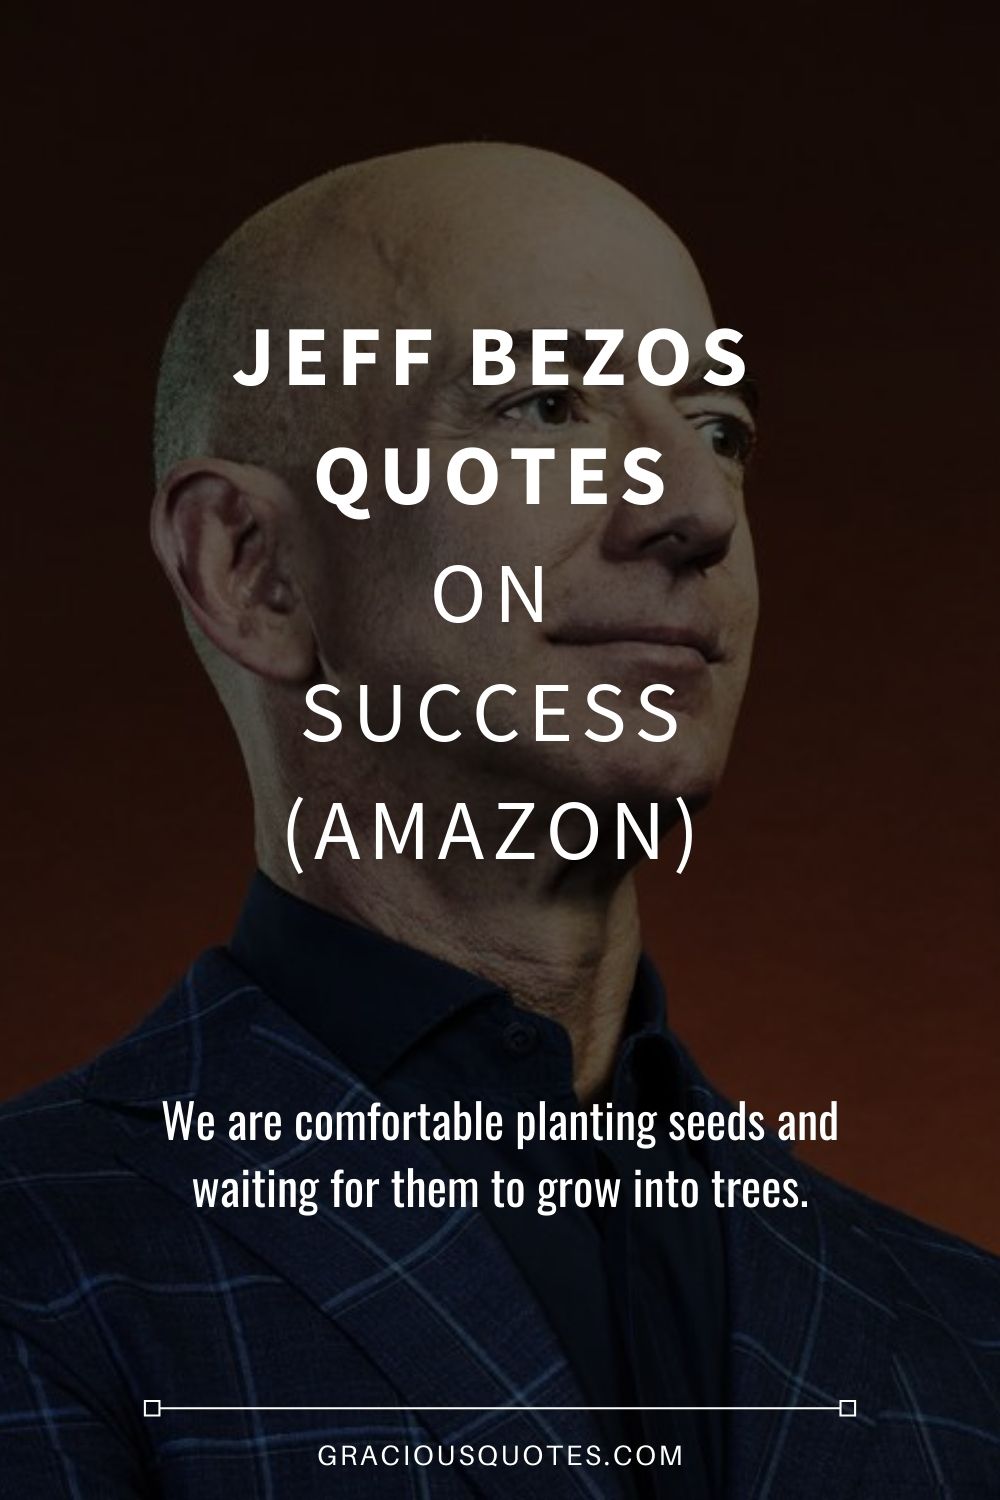 Jeff Bezos Quotes on Success (AMAZON) - Gracious Quotes